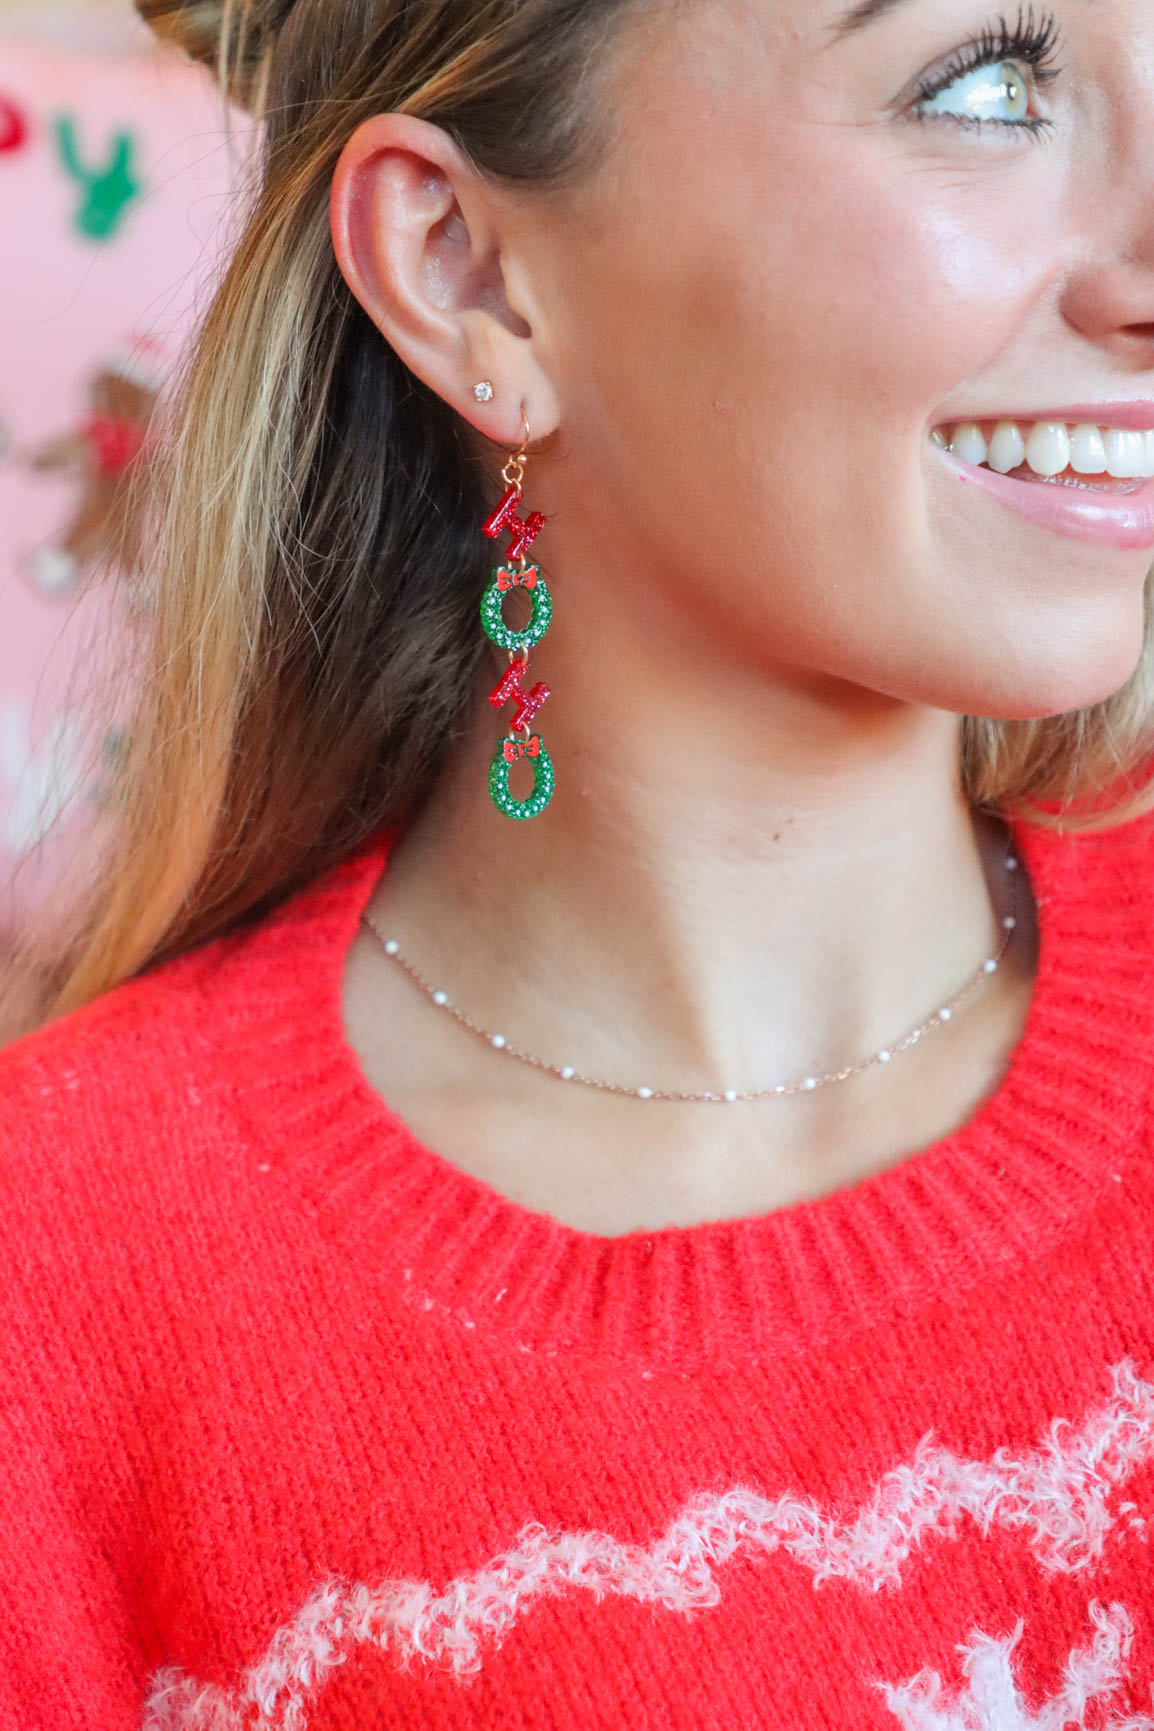 girl wearing red and green "ho ho ho" earrings